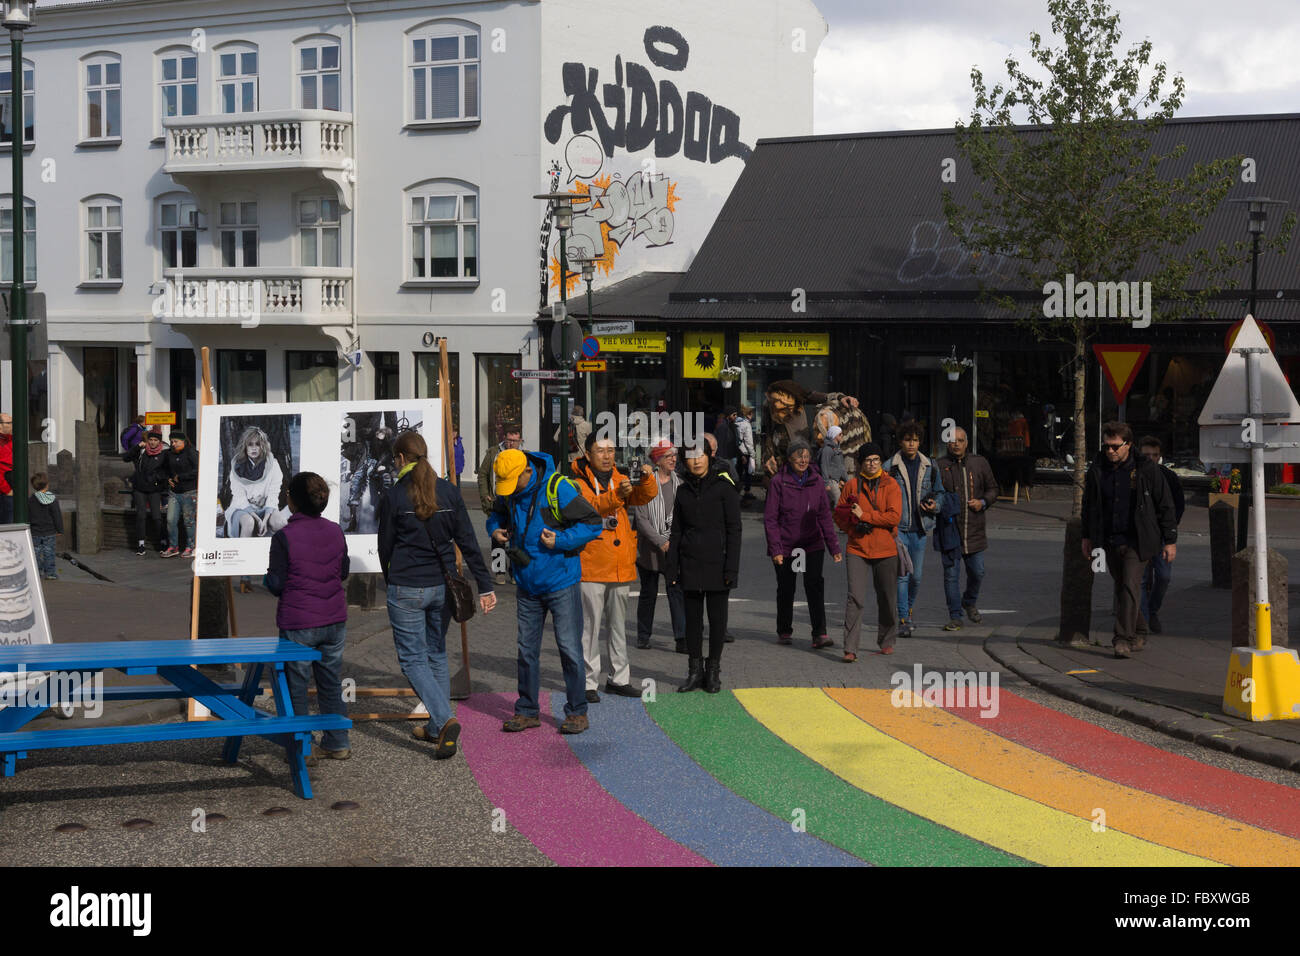 Reykjavik Pride - Skólavörðustígur street has been painted in rainbow colours as part of the city's annual Gay Pride festival Stock Photo